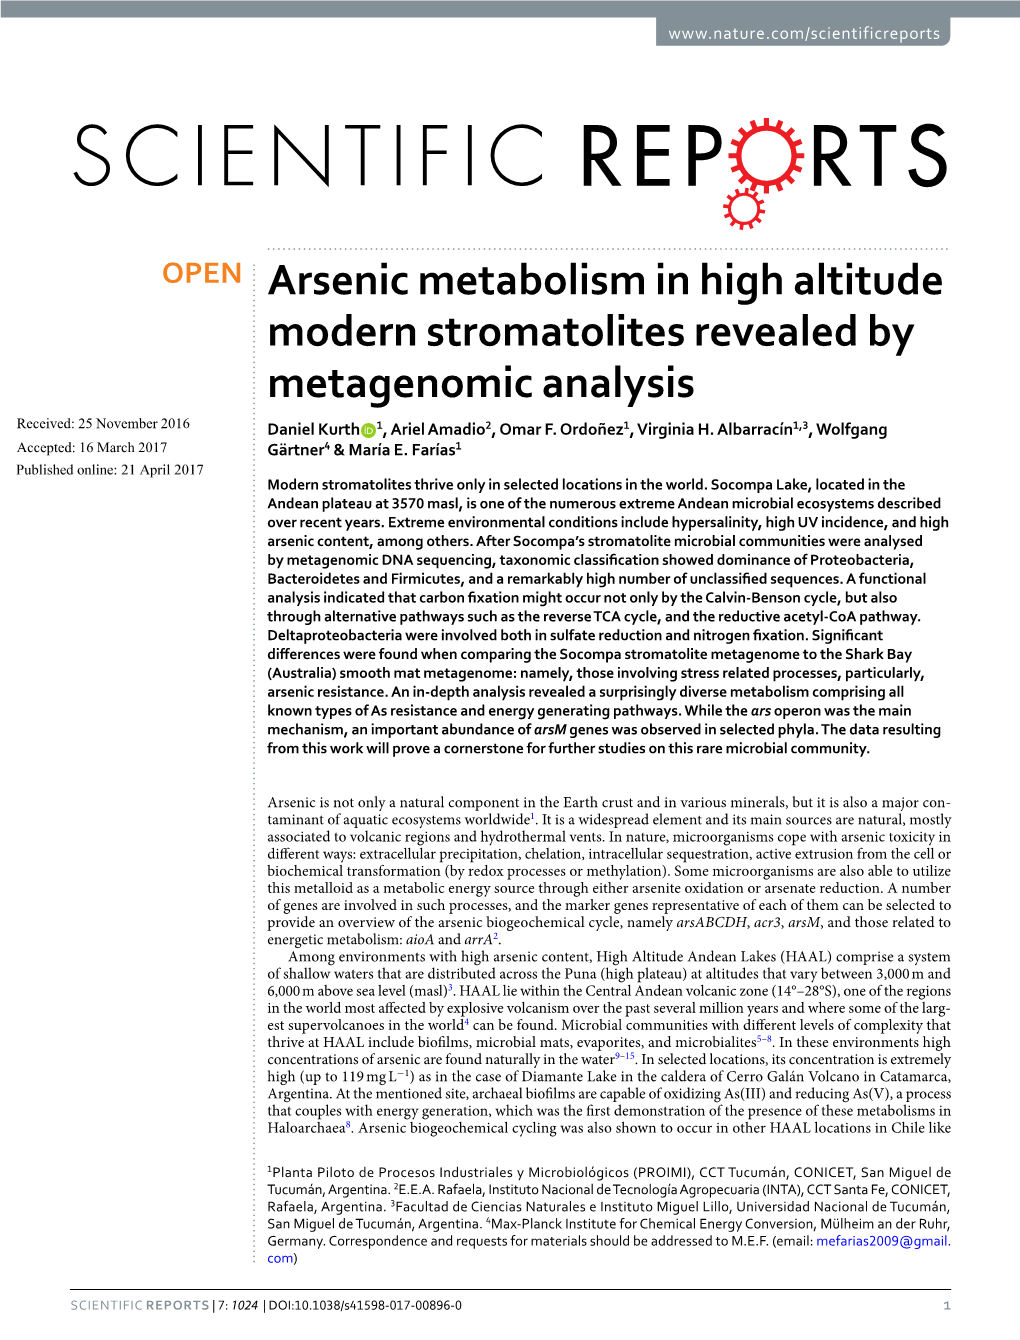 Arsenic Metabolism in High Altitude Modern Stromatolites Revealed by Metagenomic Analysis Received: 25 November 2016 Daniel Kurth 1, Ariel Amadio2, Omar F